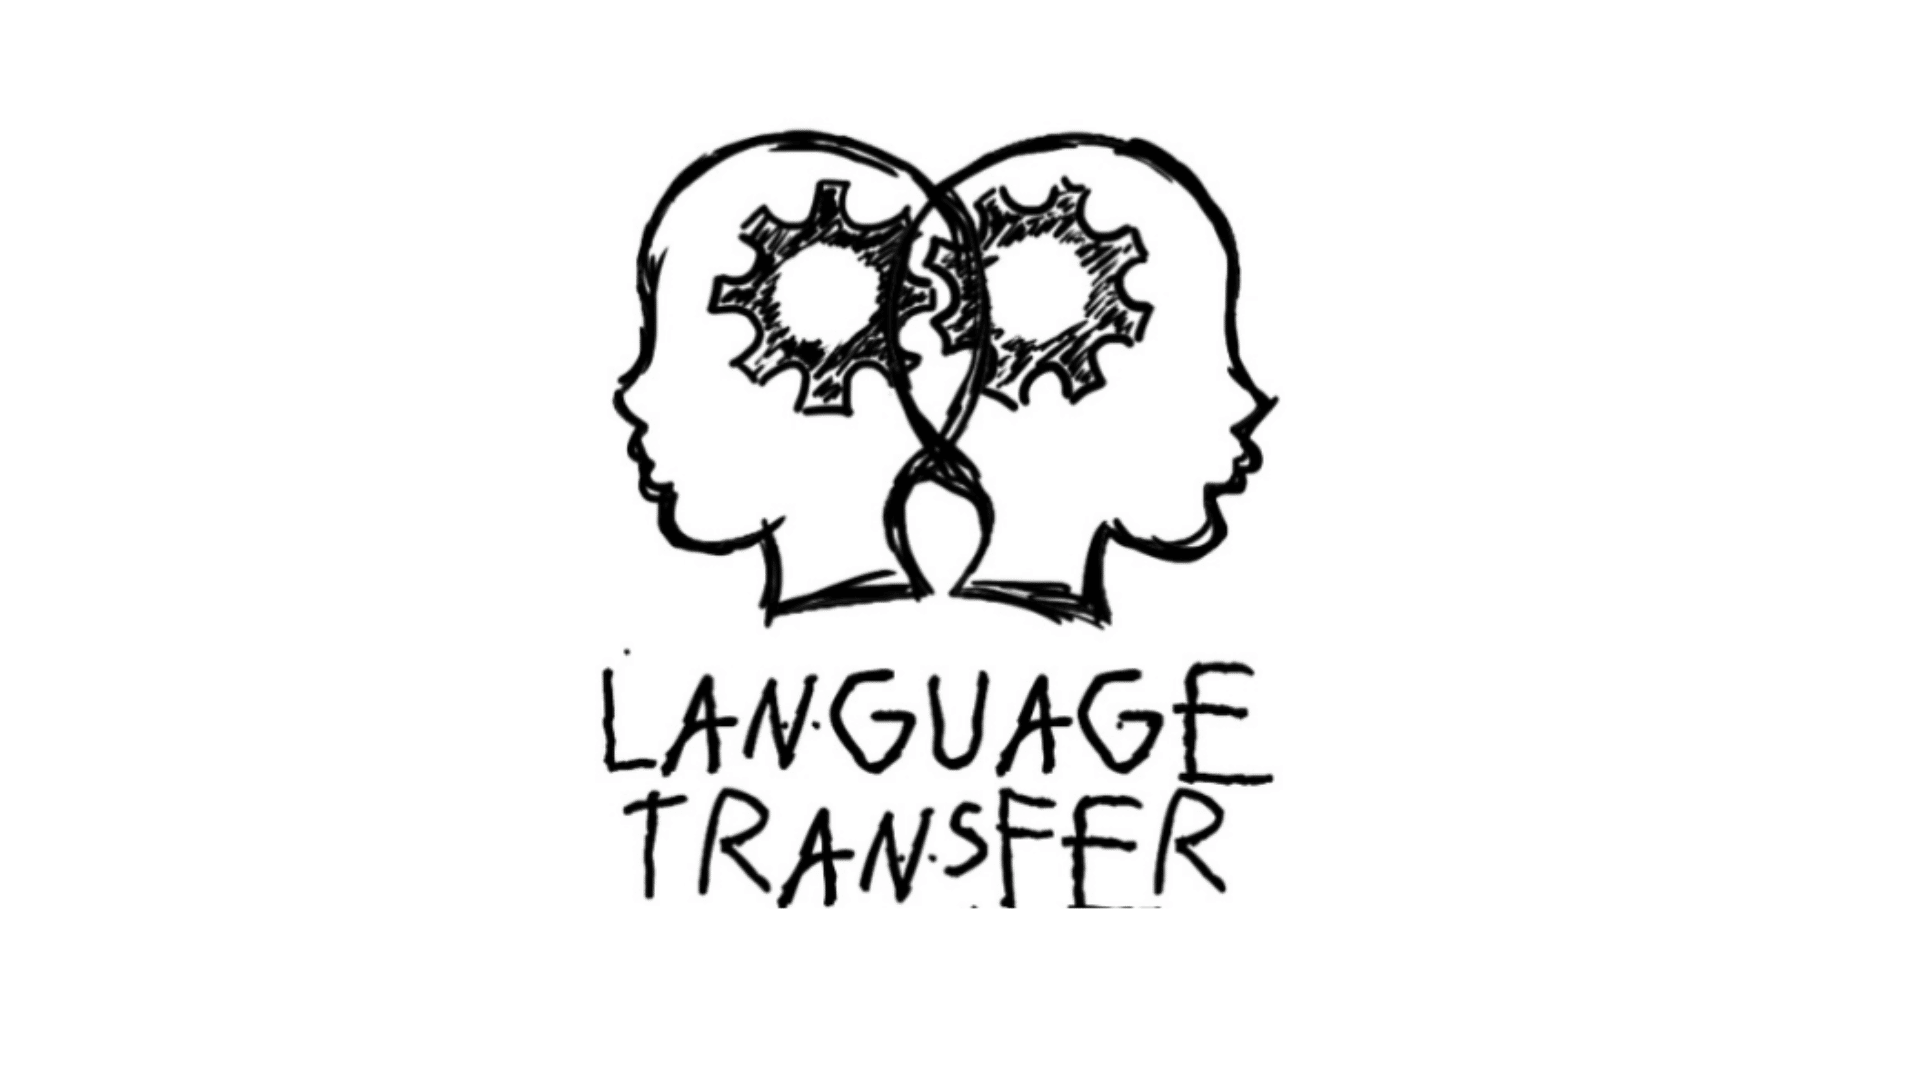 Language Transfer